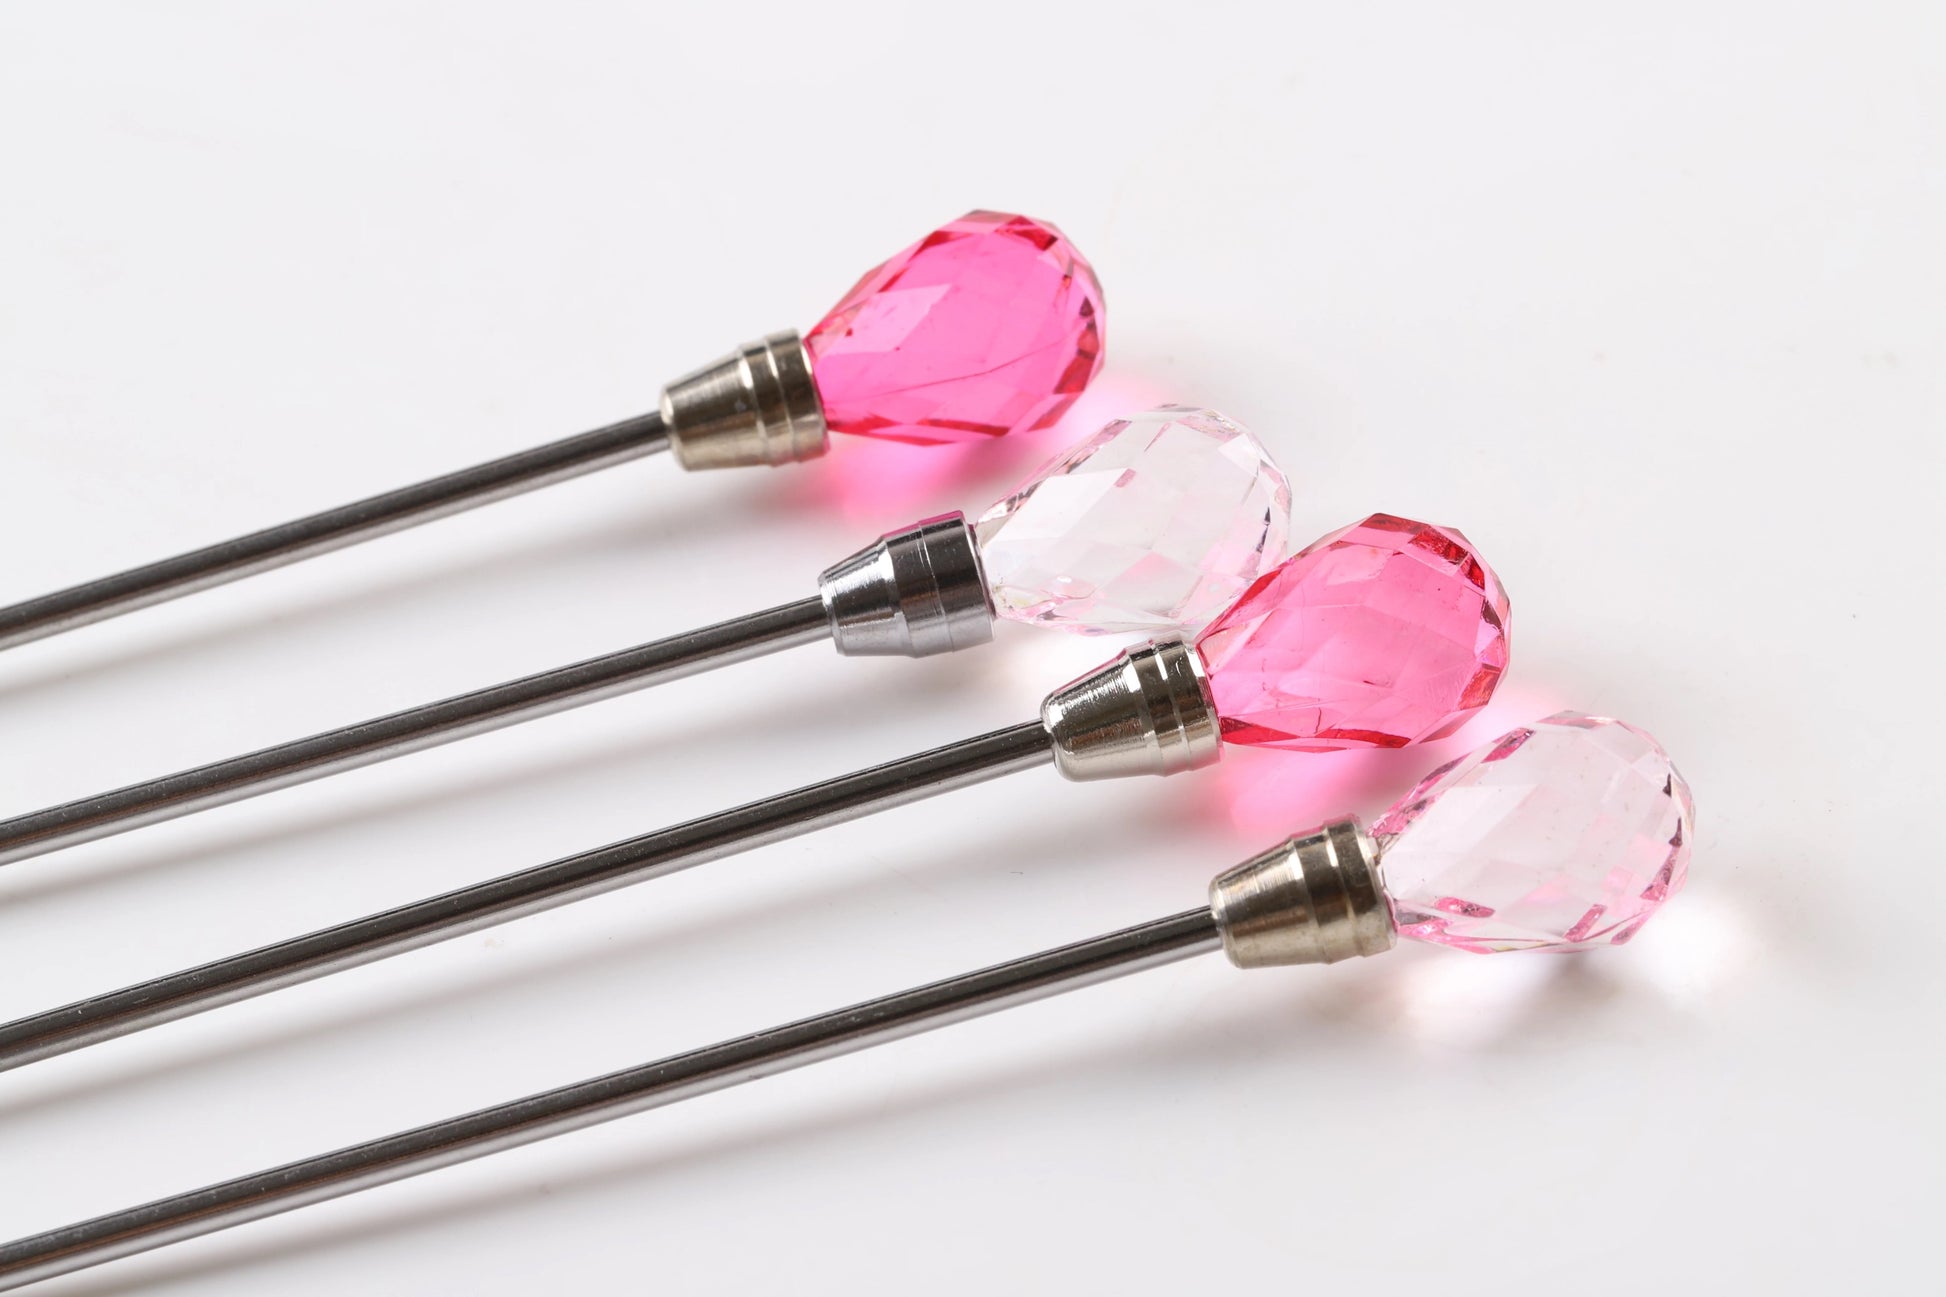 Pink Stirring Gel Tool 3 Style - Premier Nail Supply 